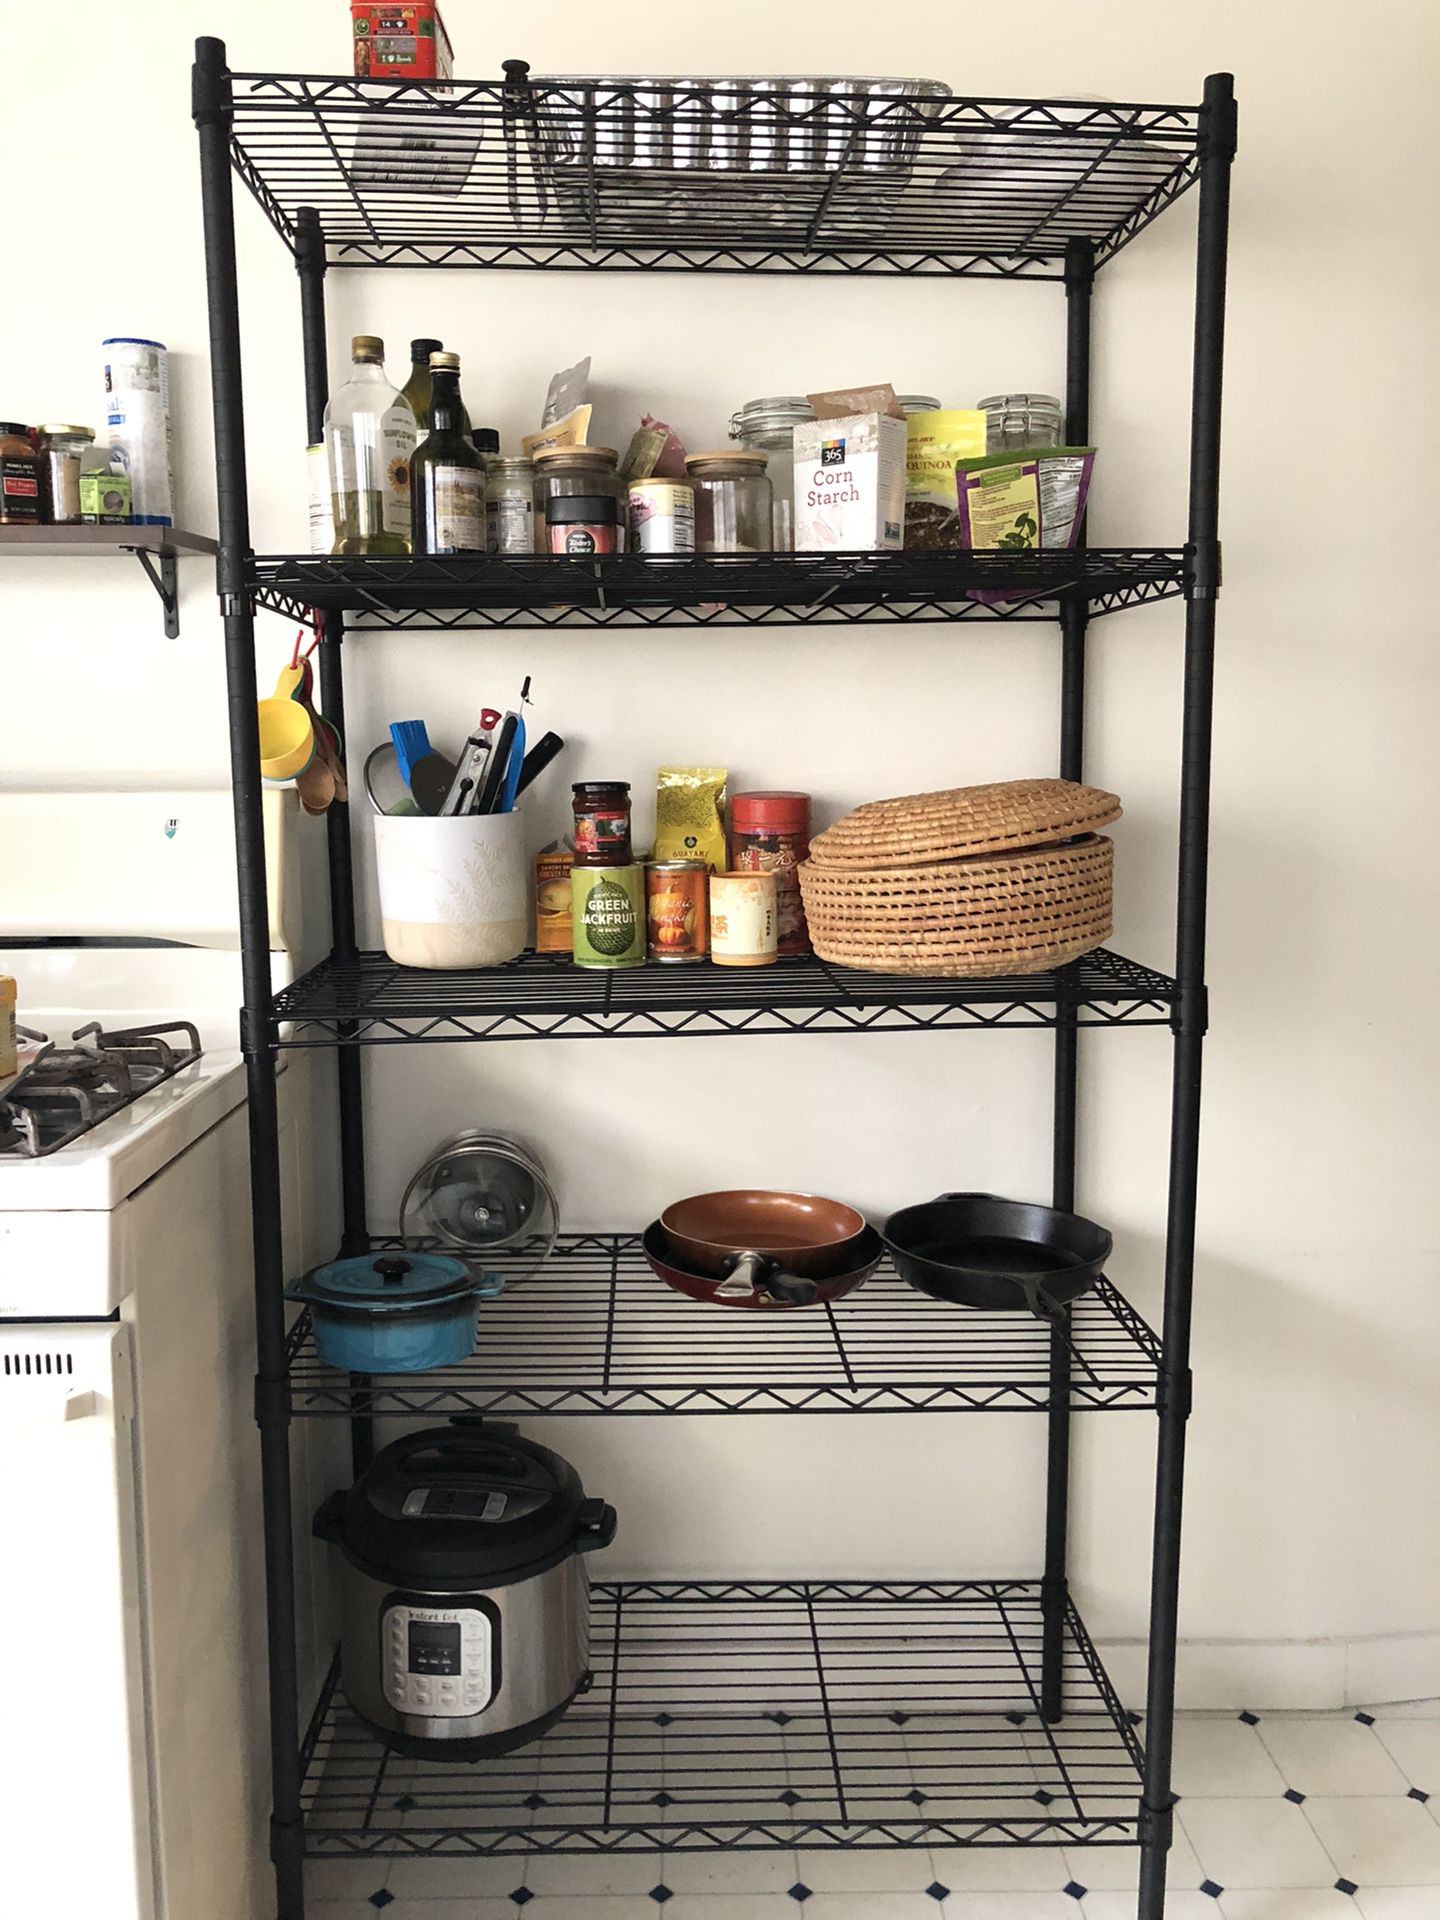 Kitchen/storage shelves/rack. 4 rows